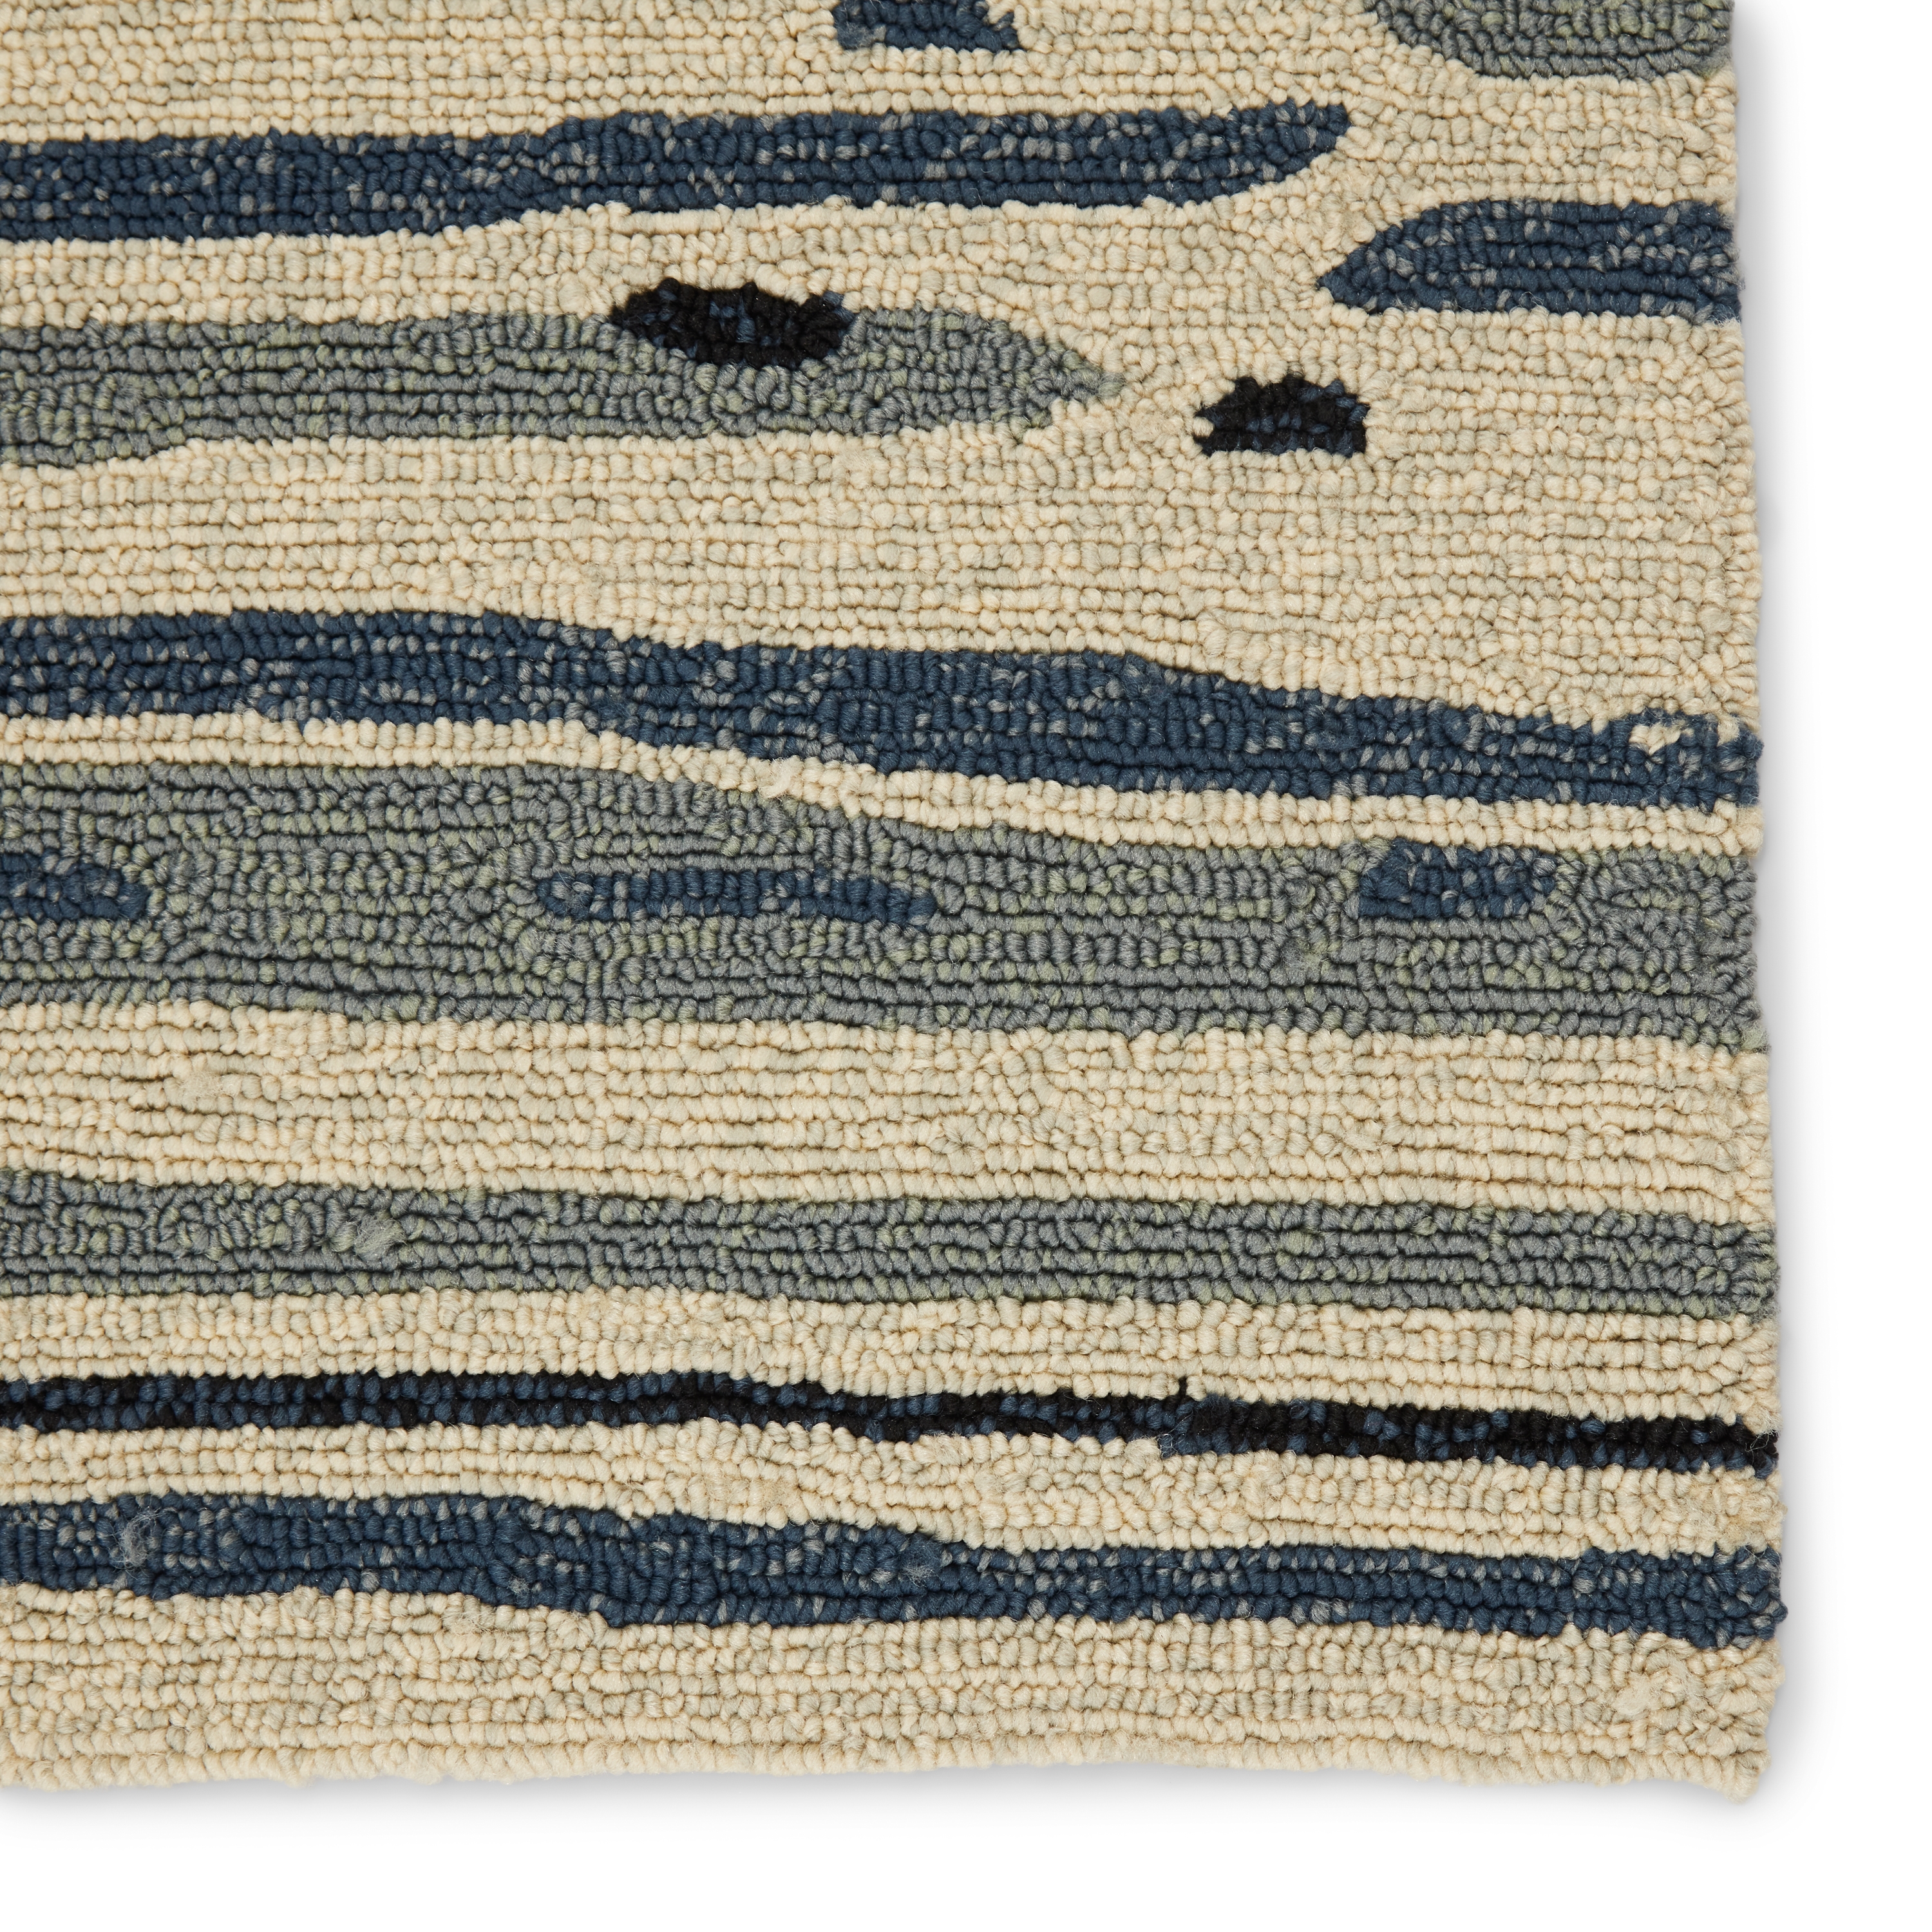 Lauren Wan by Sketchy Lines Indoor/ Outdoor Abstract Silver/ Blue Area Rug (3'6" X 5'6") - Image 3